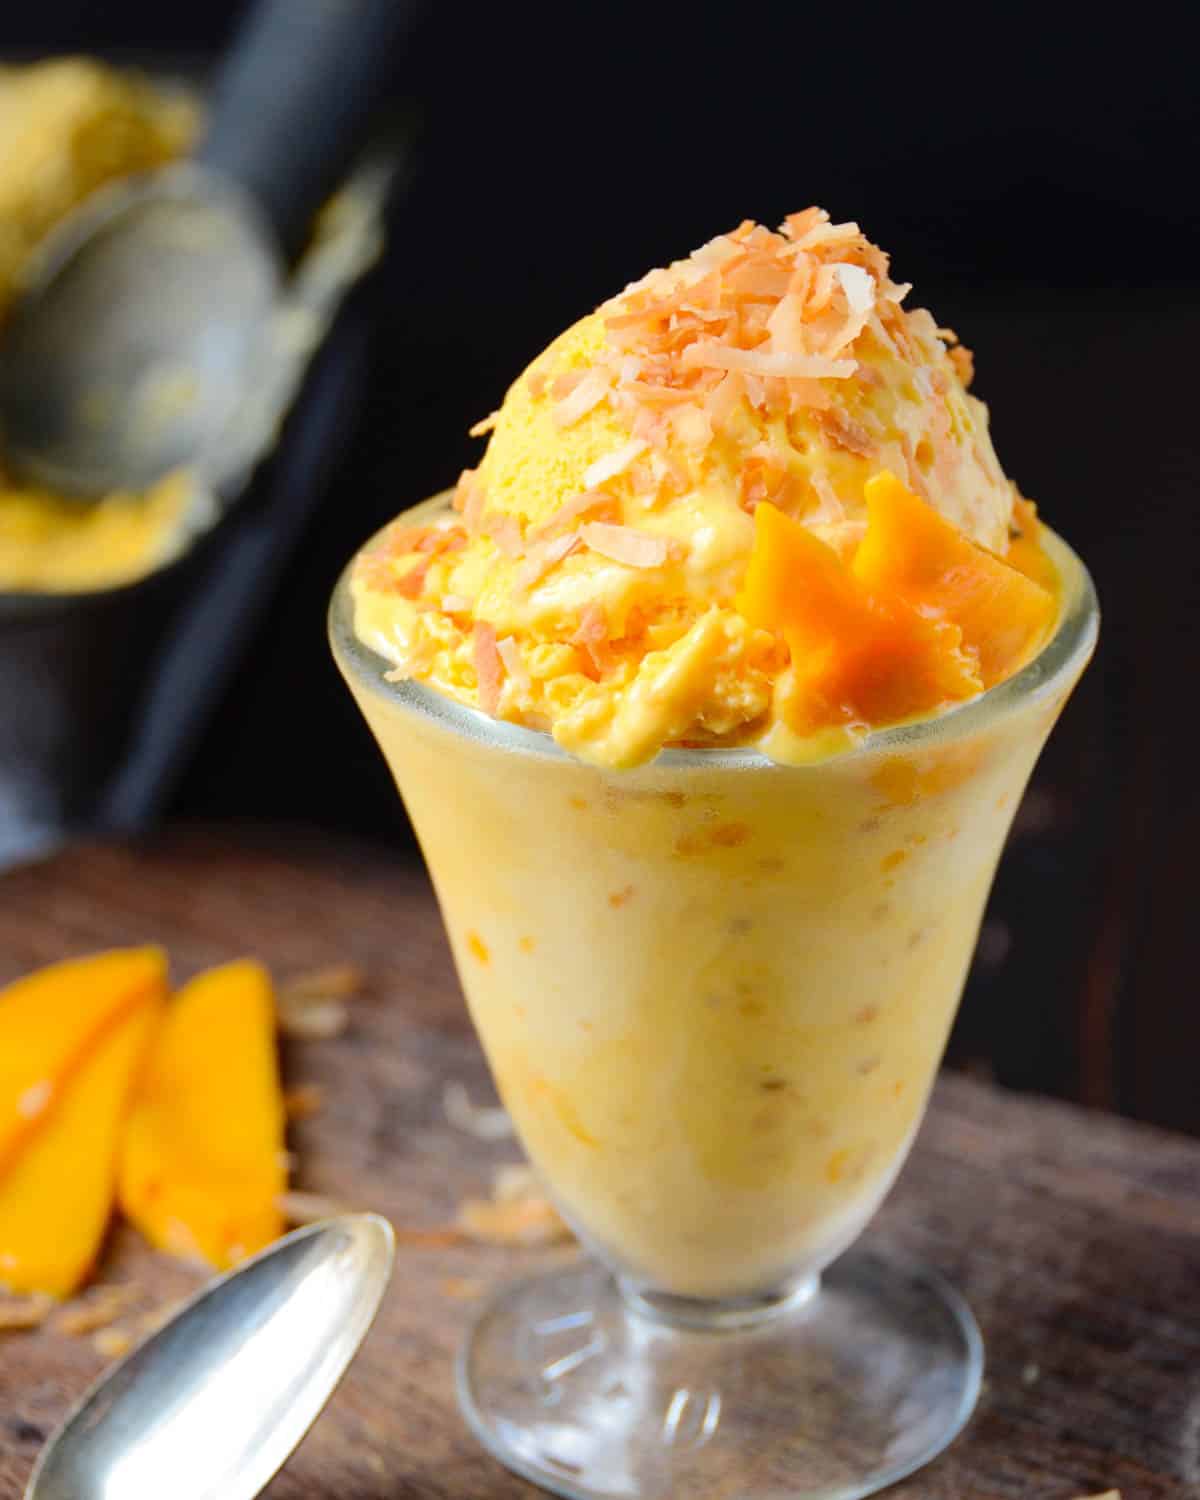 A dessert dish filled with mango ice cream. 